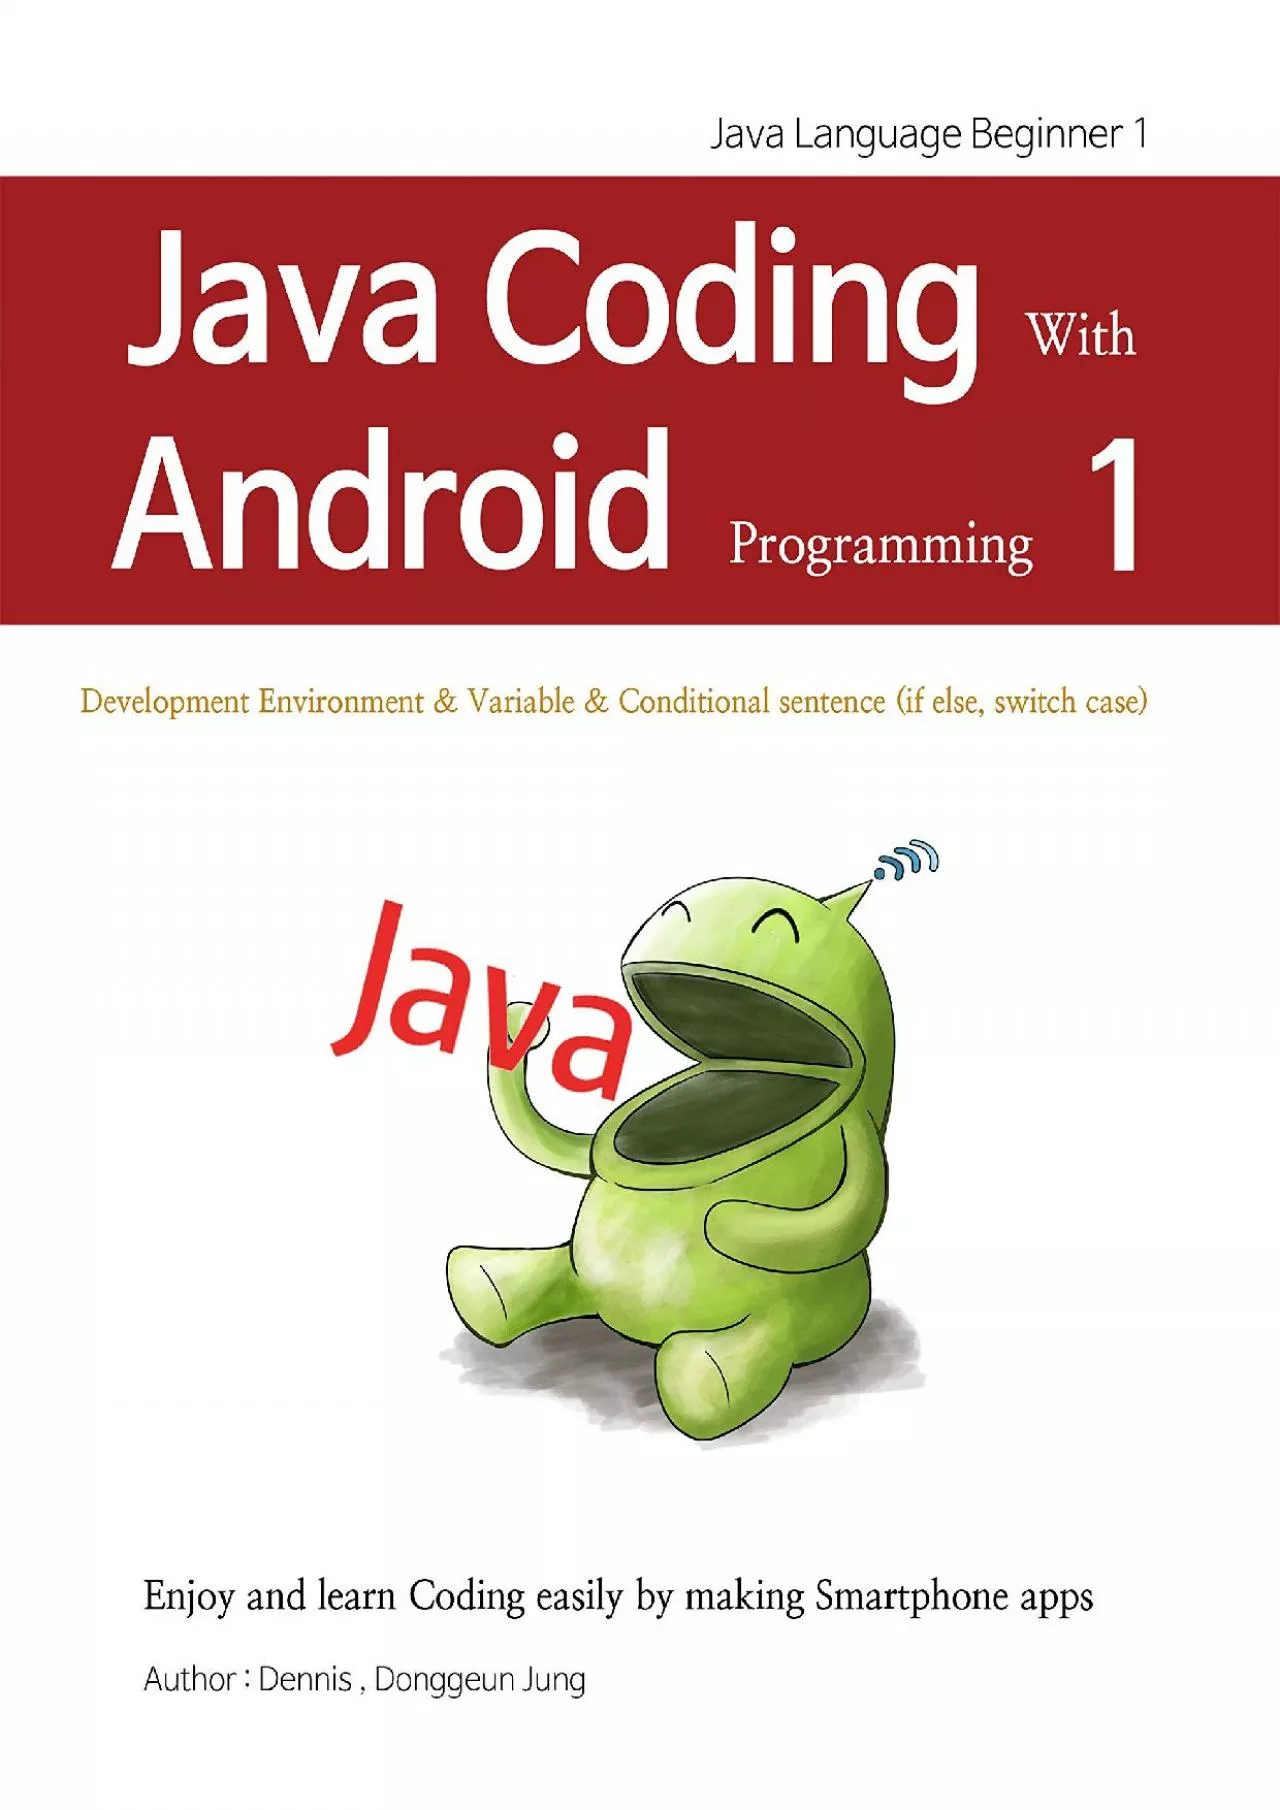 [PDF]-Java Coding with Android programming 1 Java Language Beginner 1